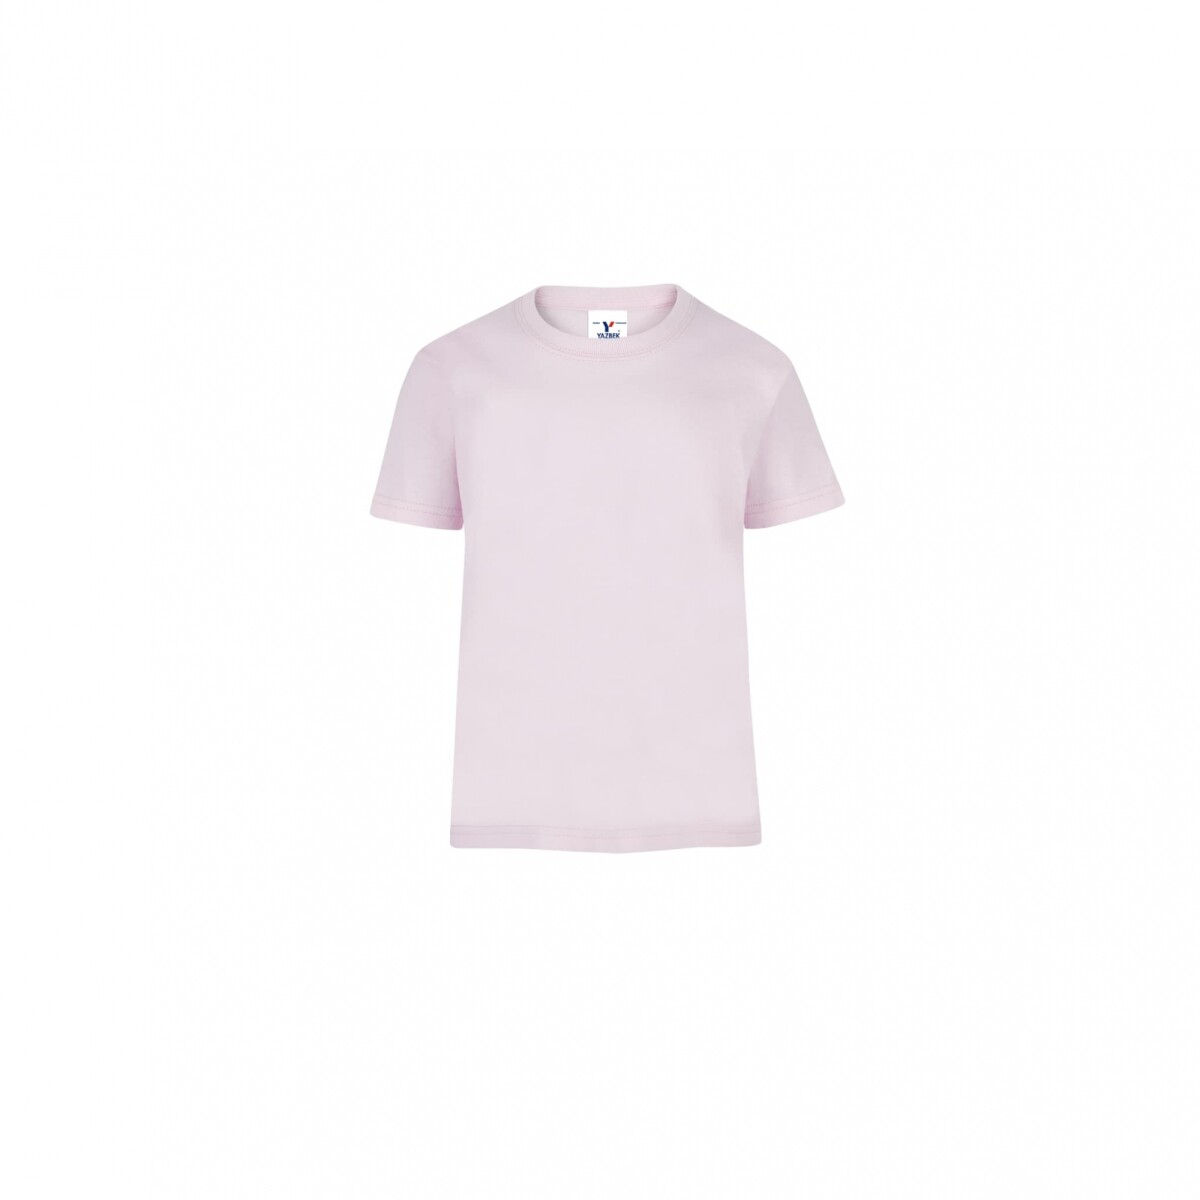 Camiseta a la base bebé - Rosa pastel 